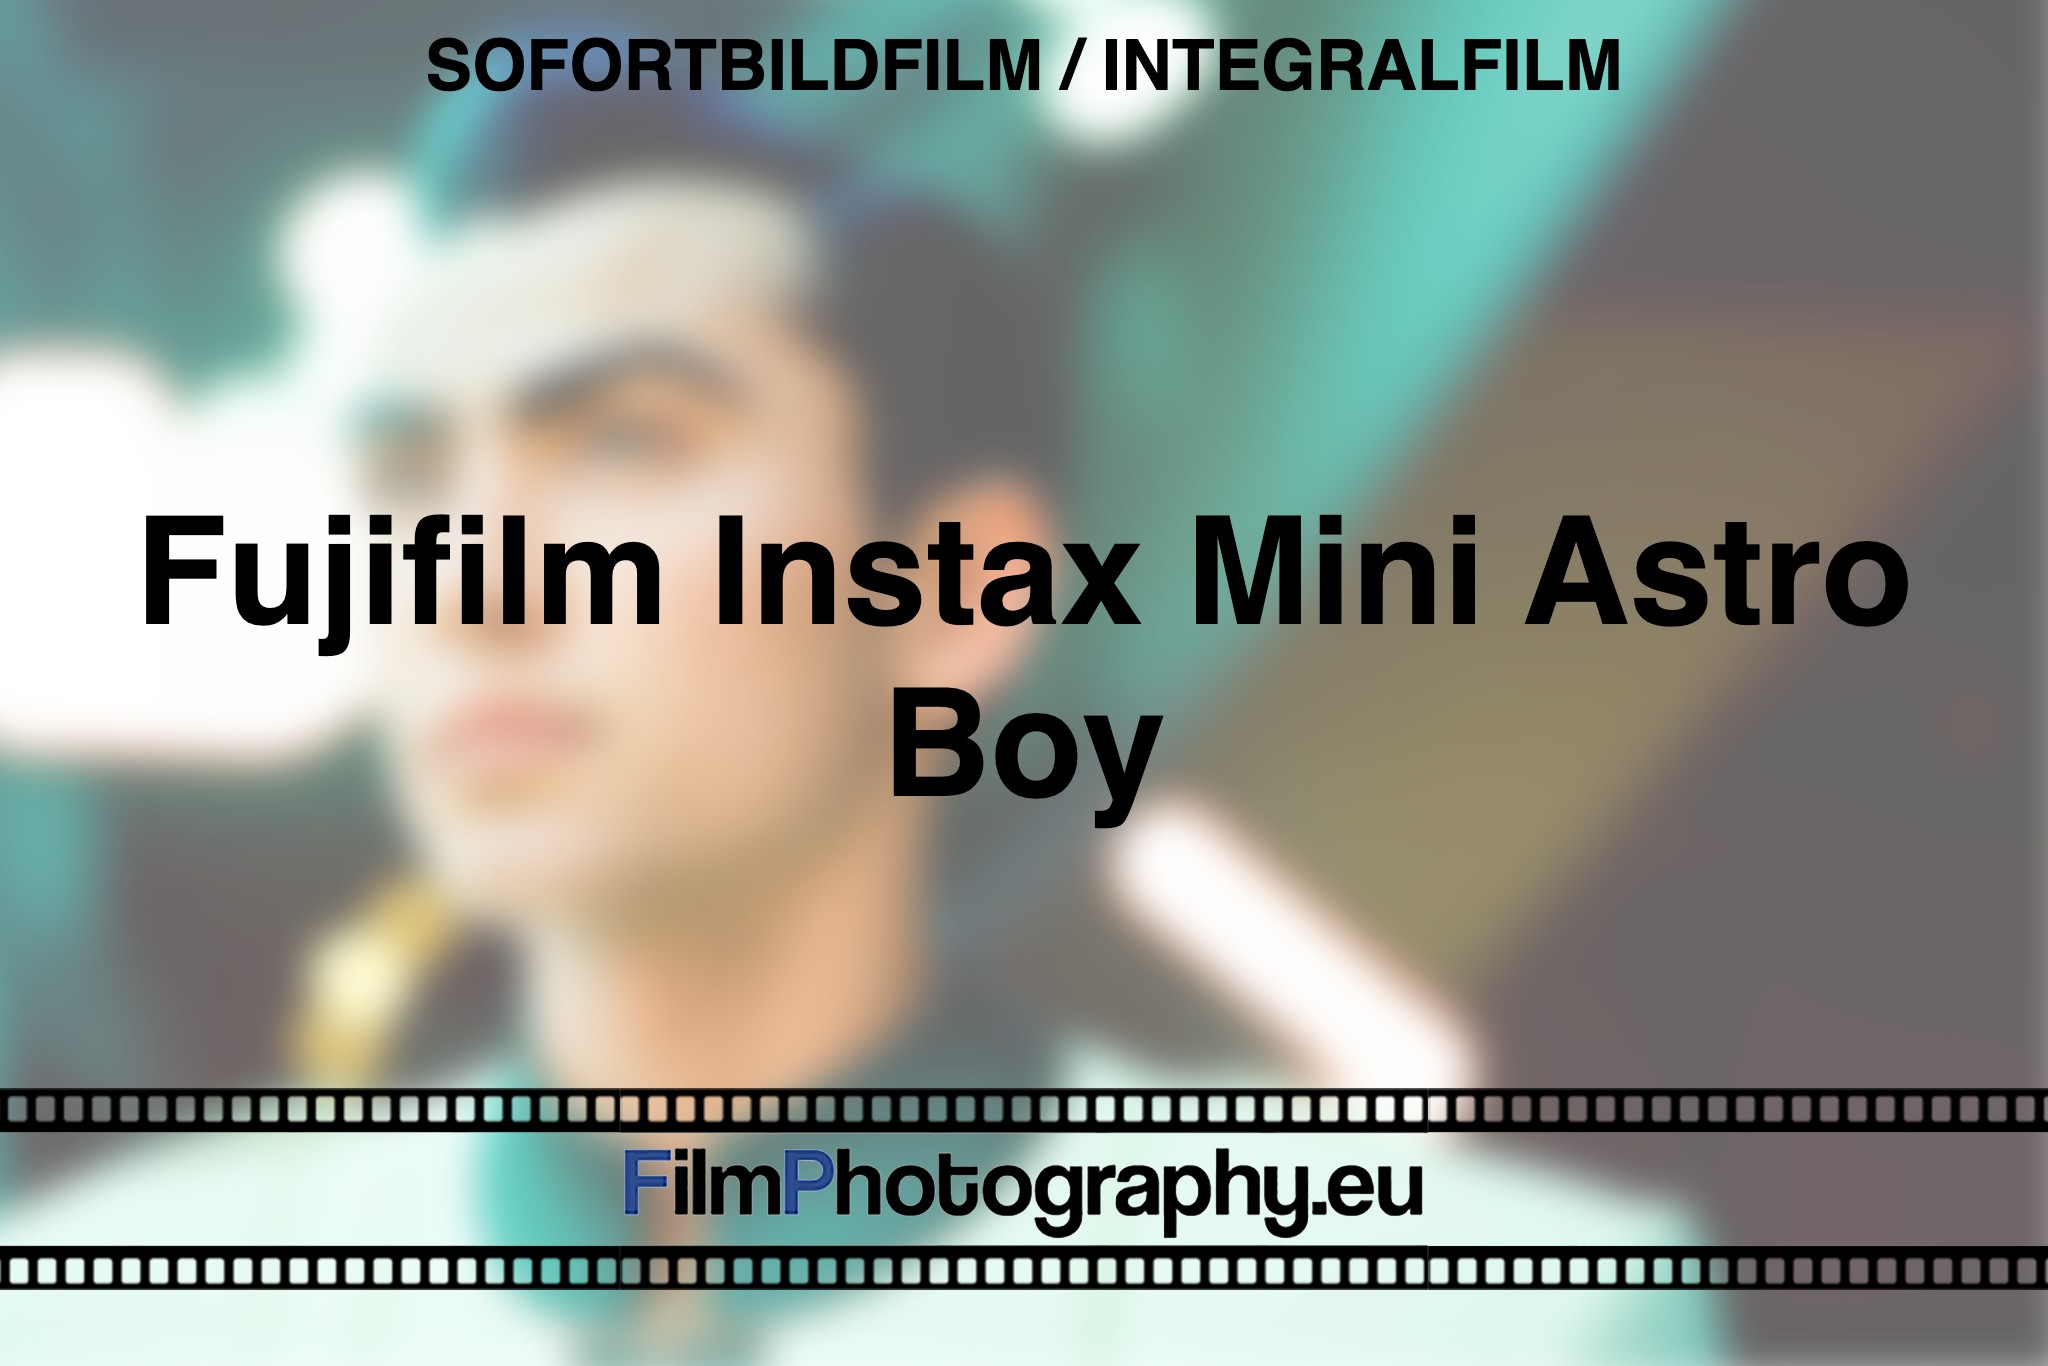 fujifilm-instax-mini-astro-boy-sofortbildfilm-integralfilm-fp-bnv